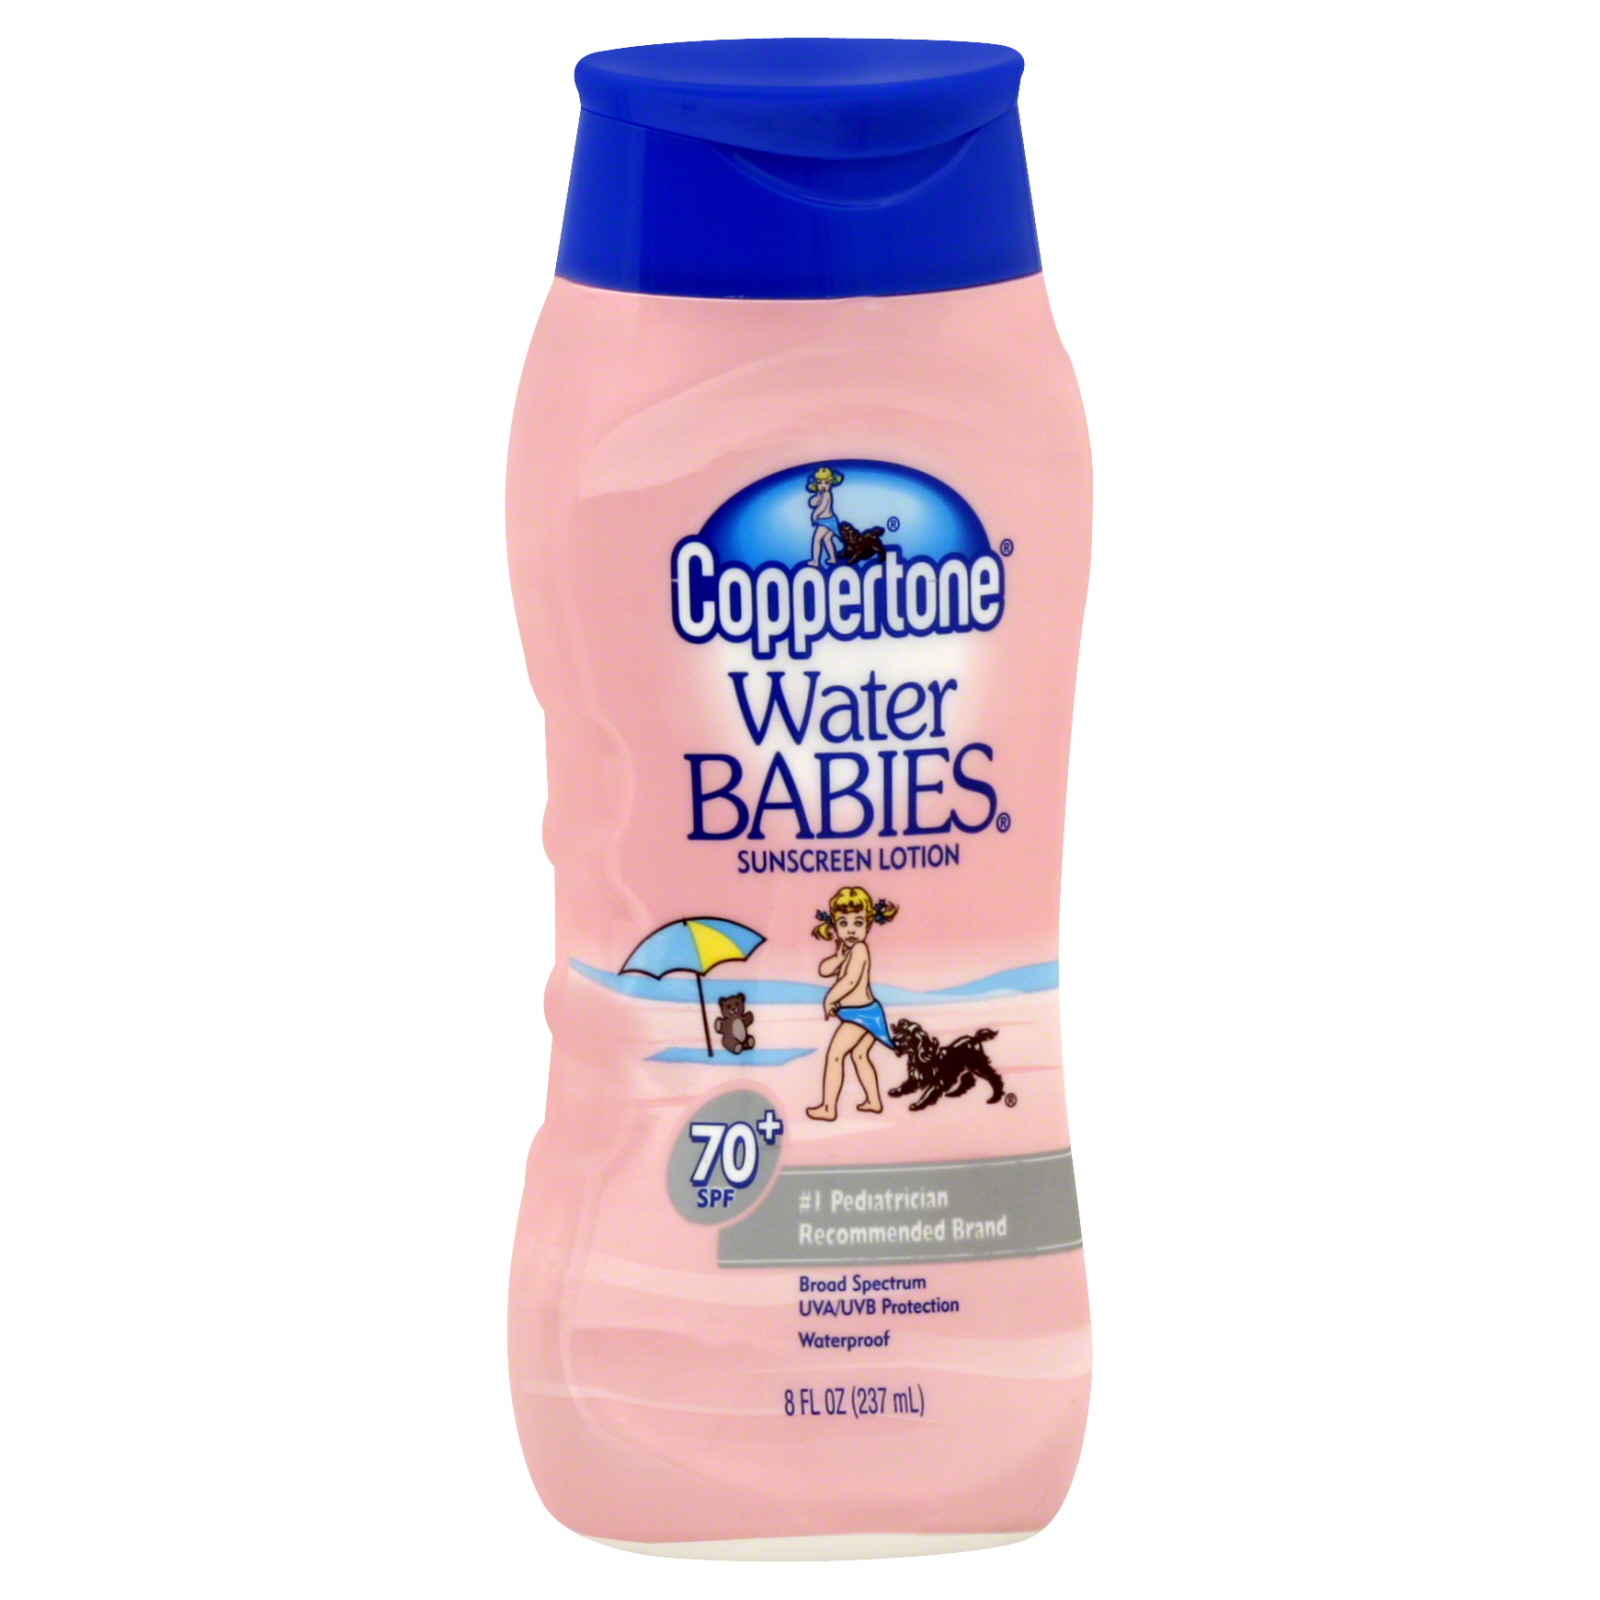 Coppertone Water Babies Sunscreen Lotion, SPF 70+, 8 fl oz (237 ml)